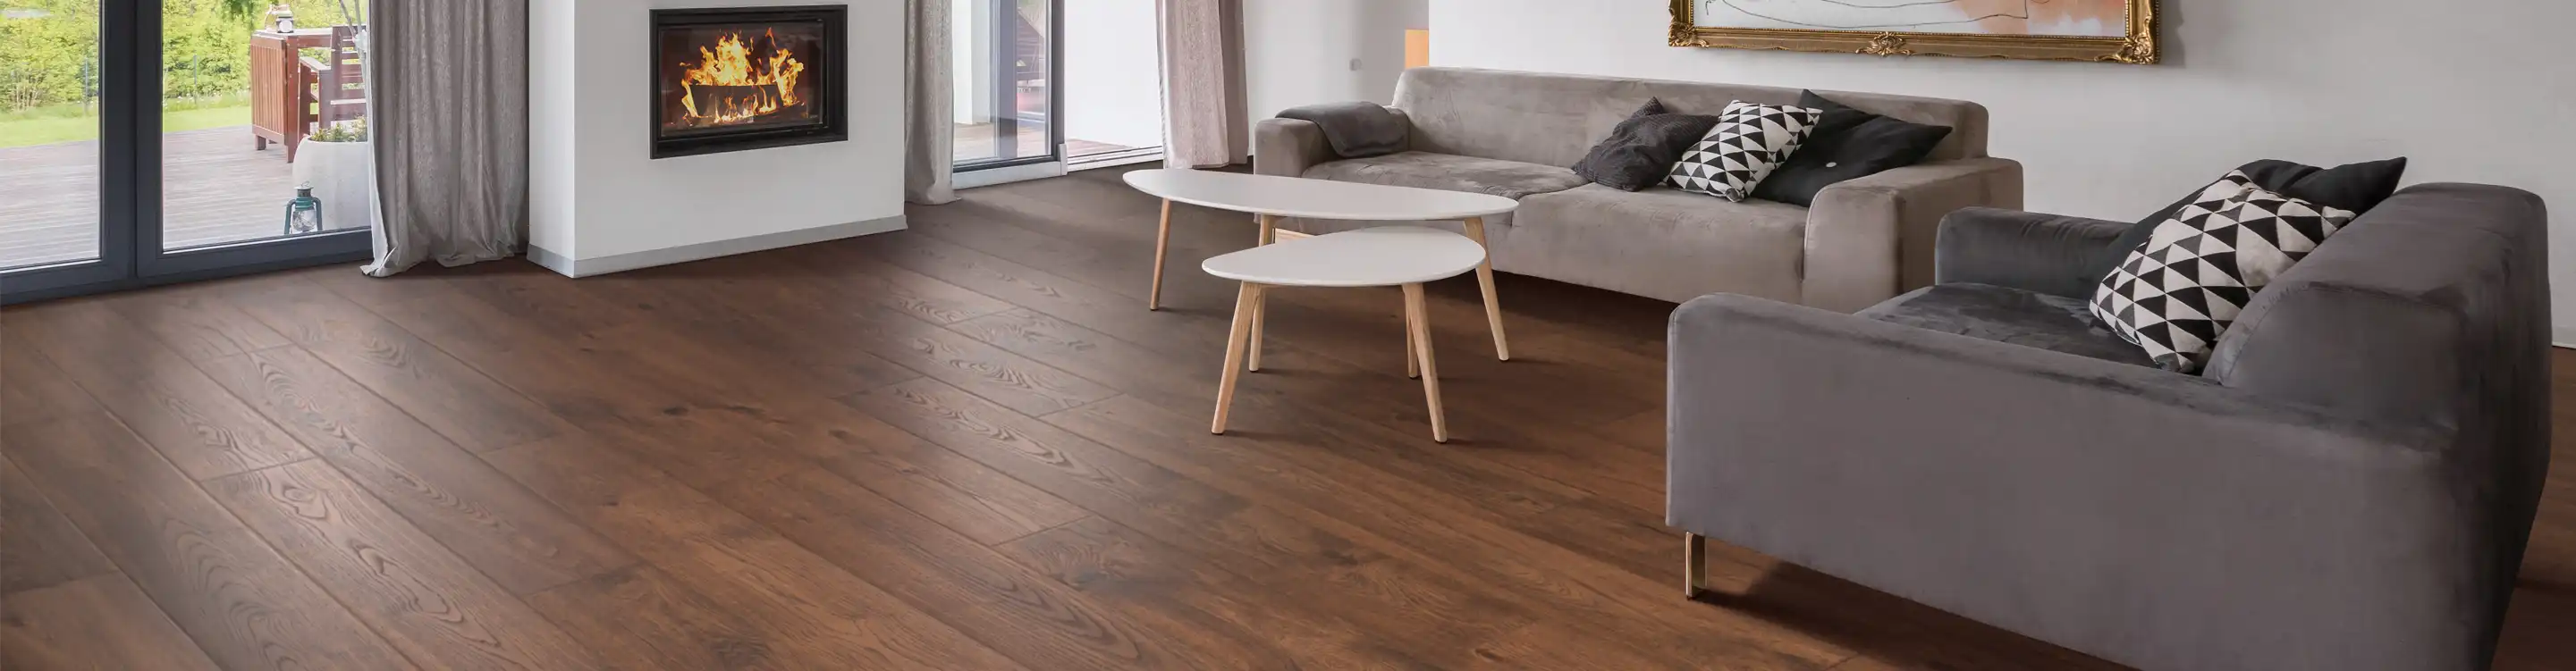 laminate flooring in modern living room